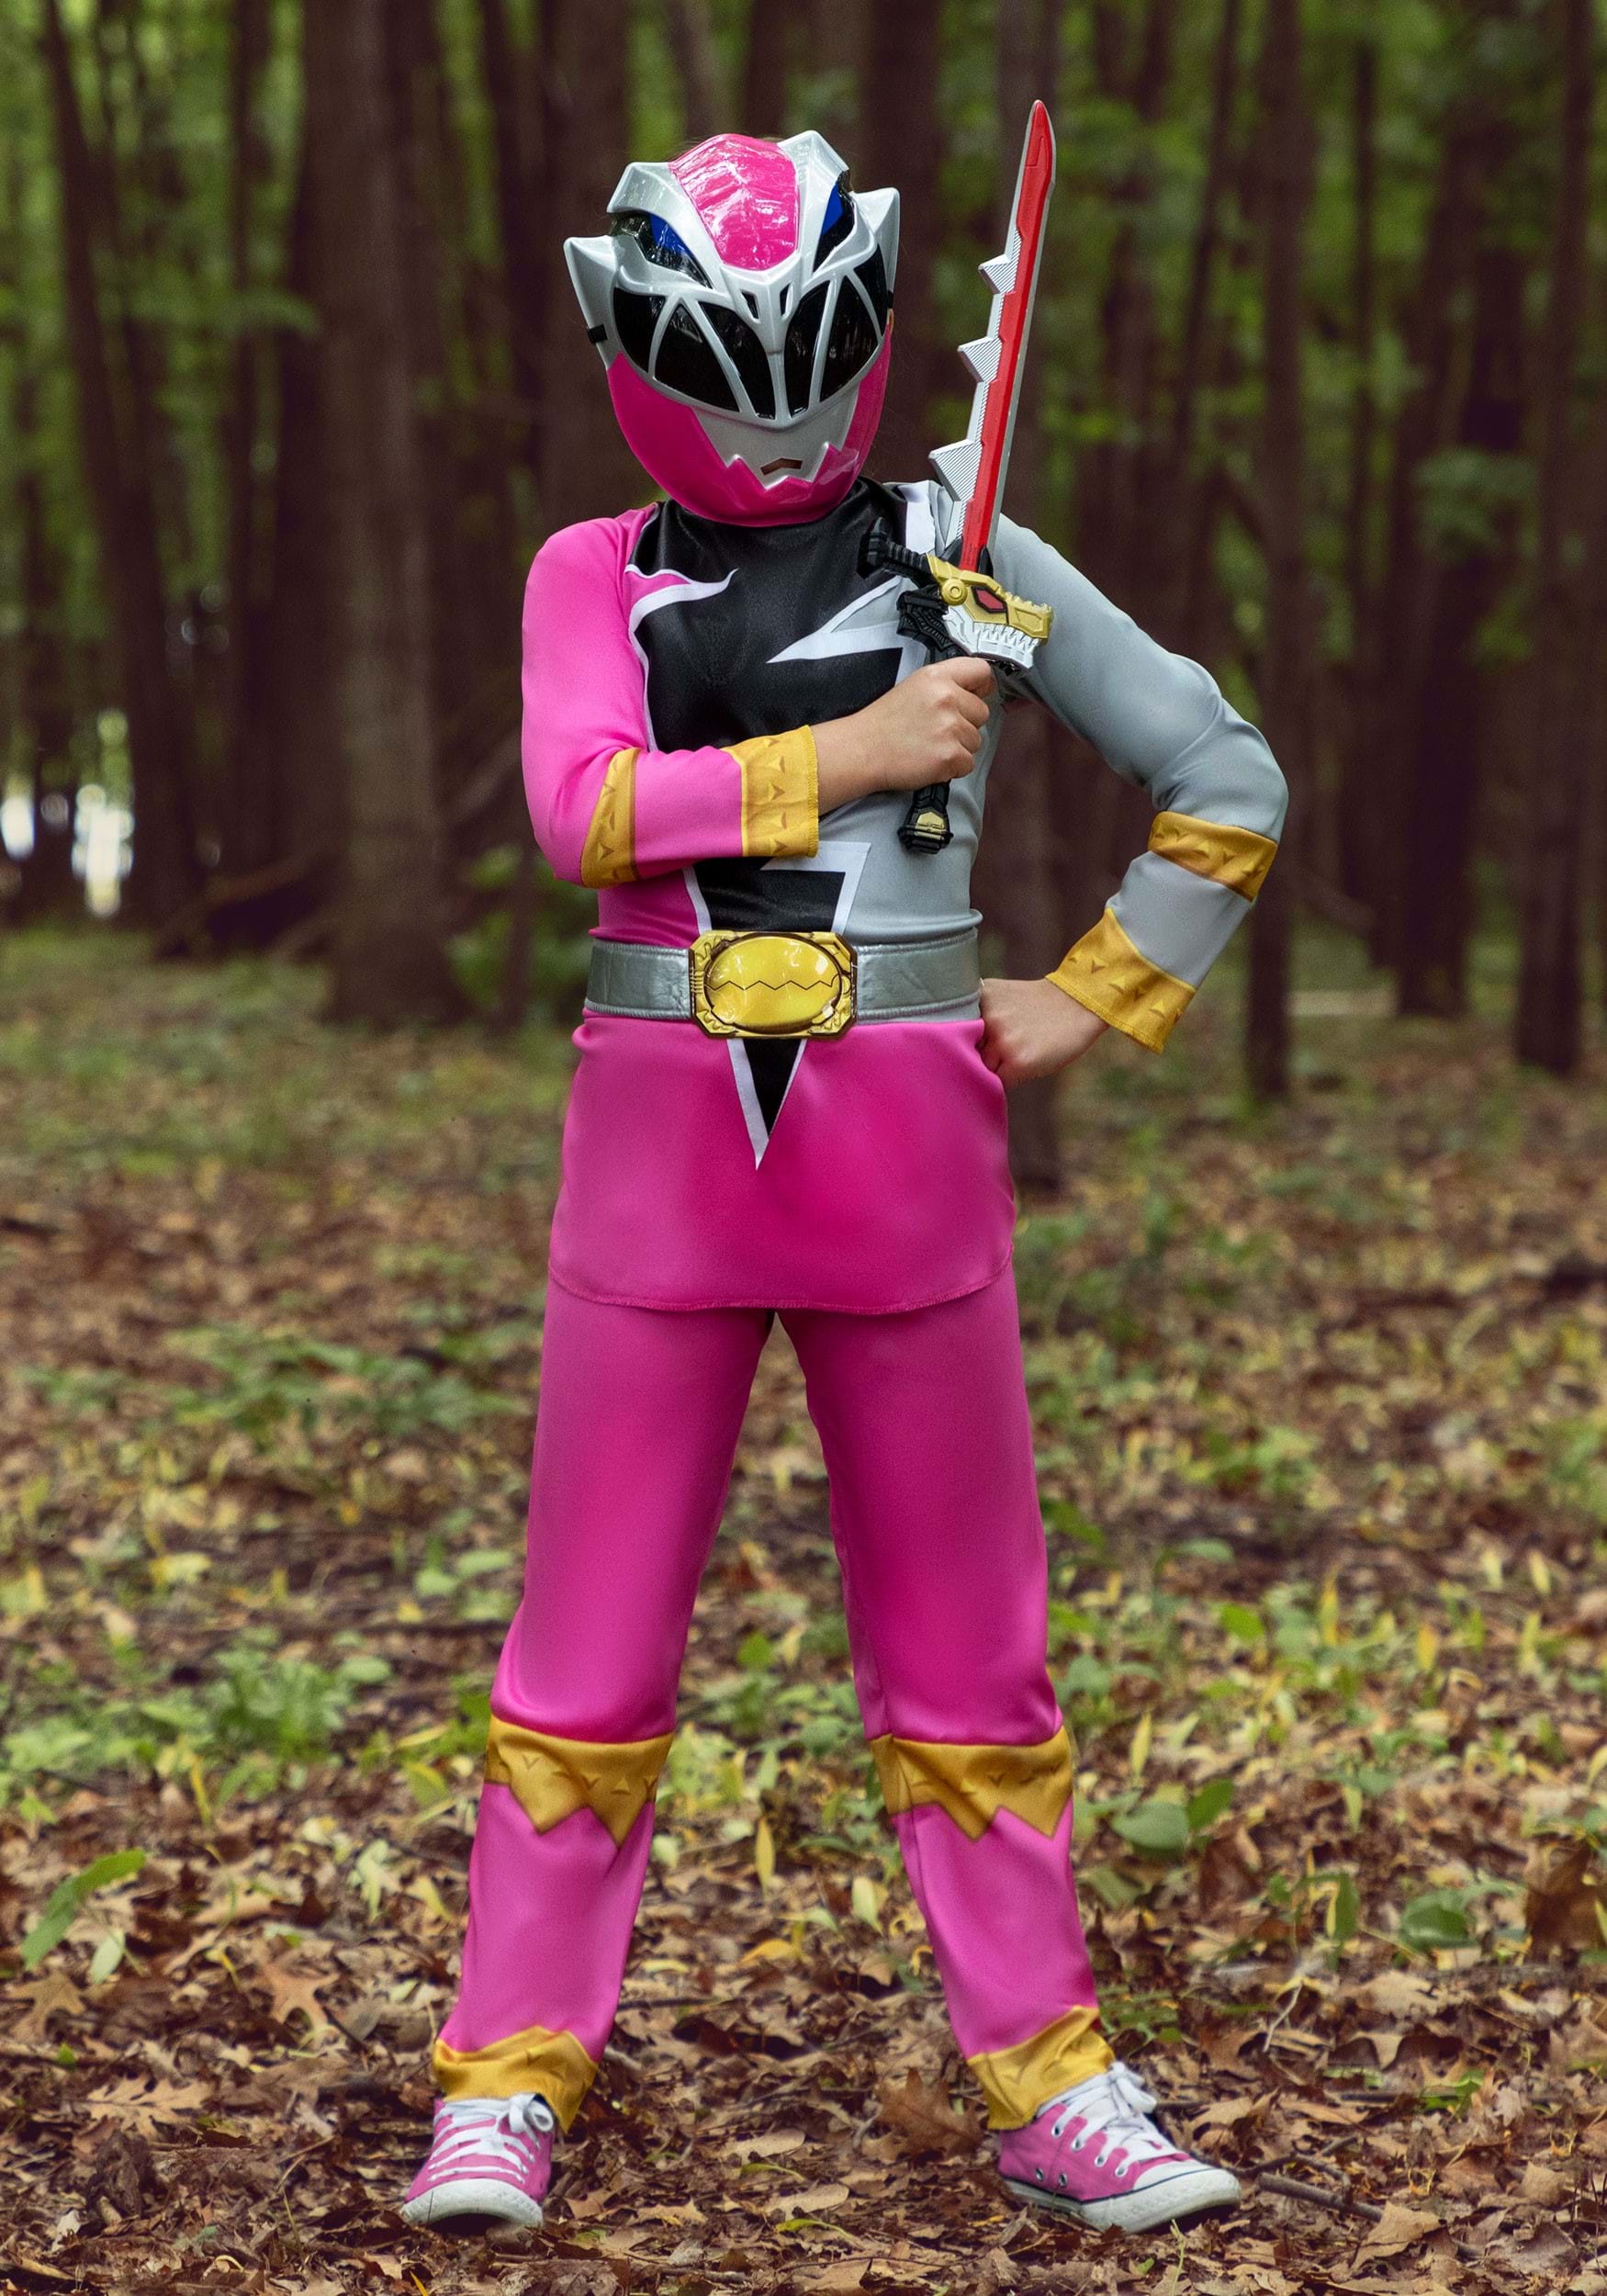 Costume Inspired Pink Power Rangers Sneakers